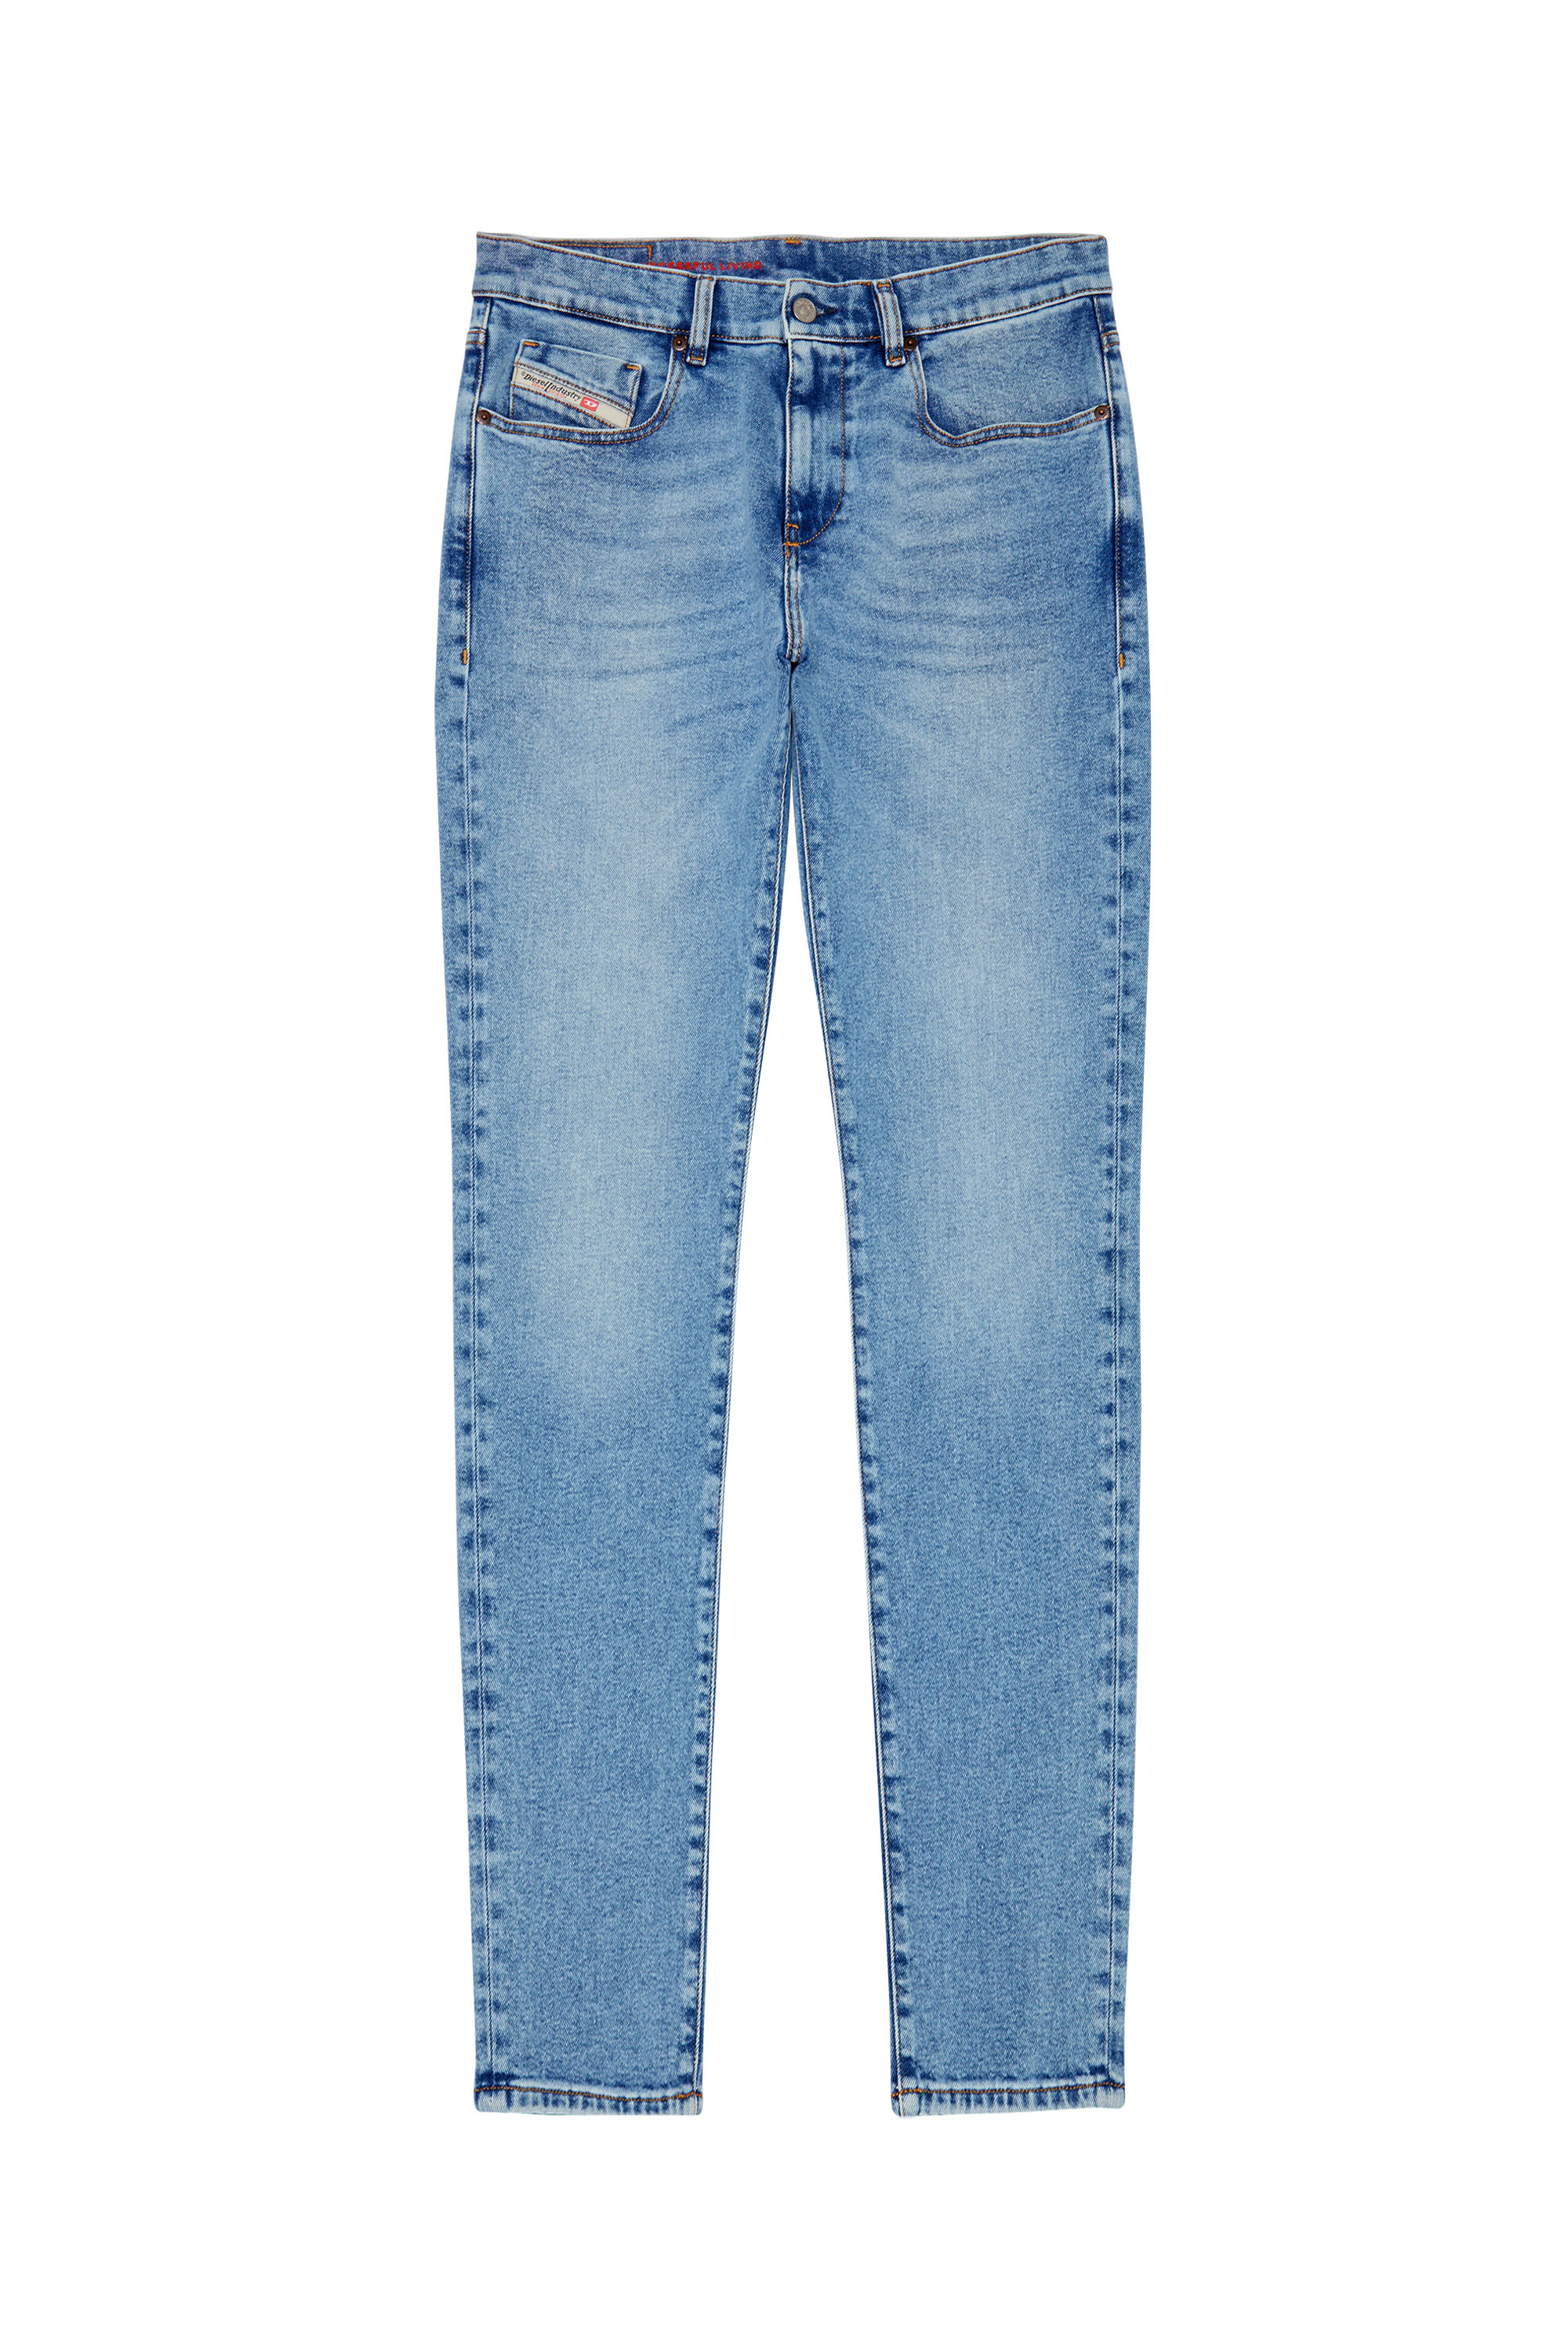 2019 D-STRUKT 09B92 Slim Jeans, Mittelblau - Jeans